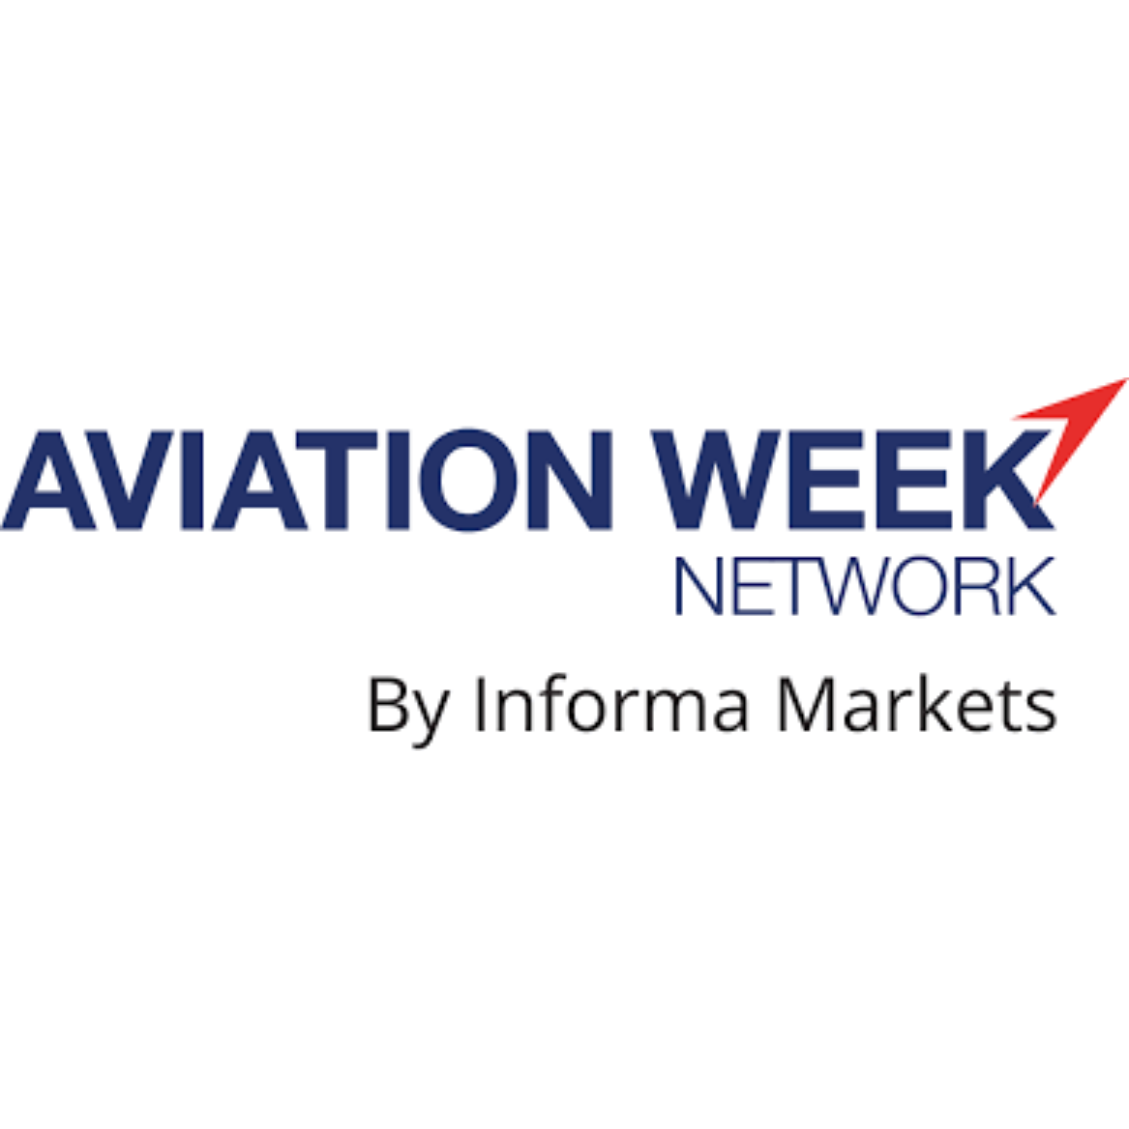 Aviation Network by Informa